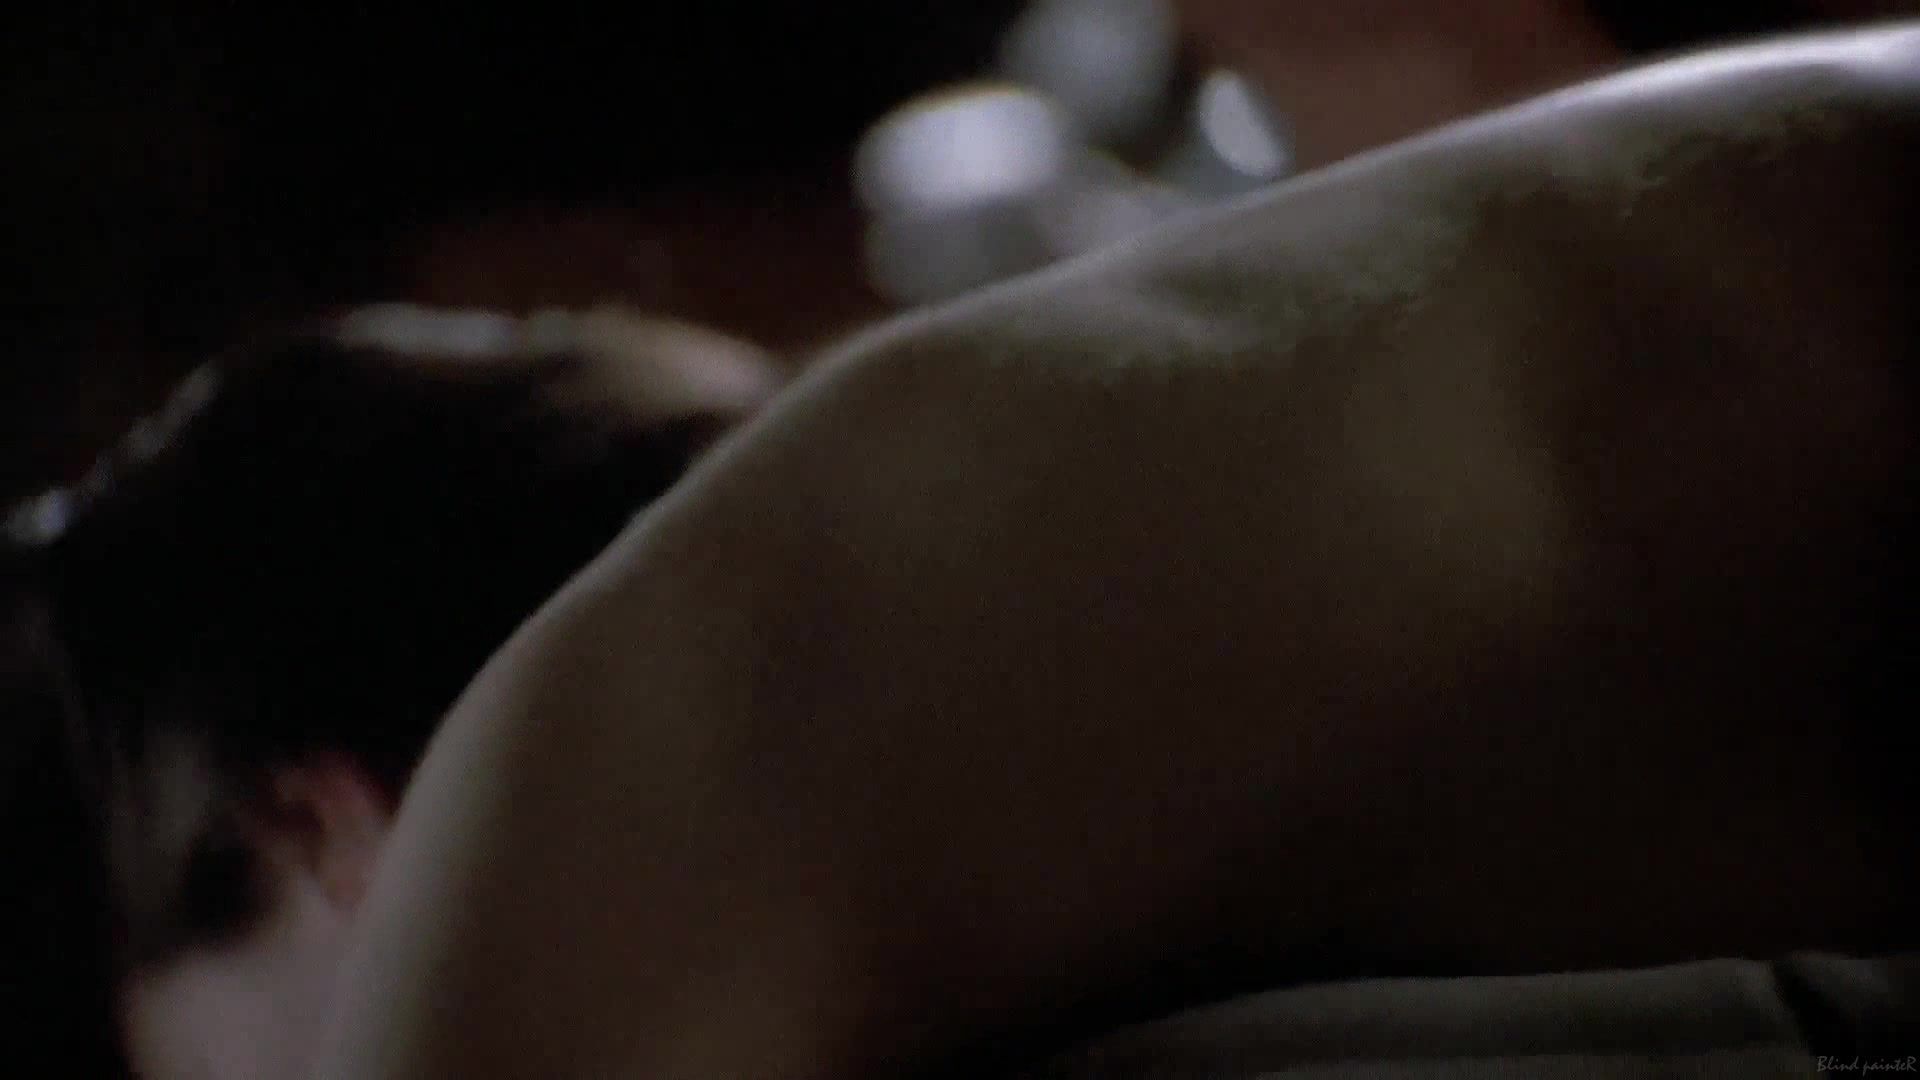 GiganTits Linda Fiorentino naked - The Last Seduction (1994) PornBB - 1